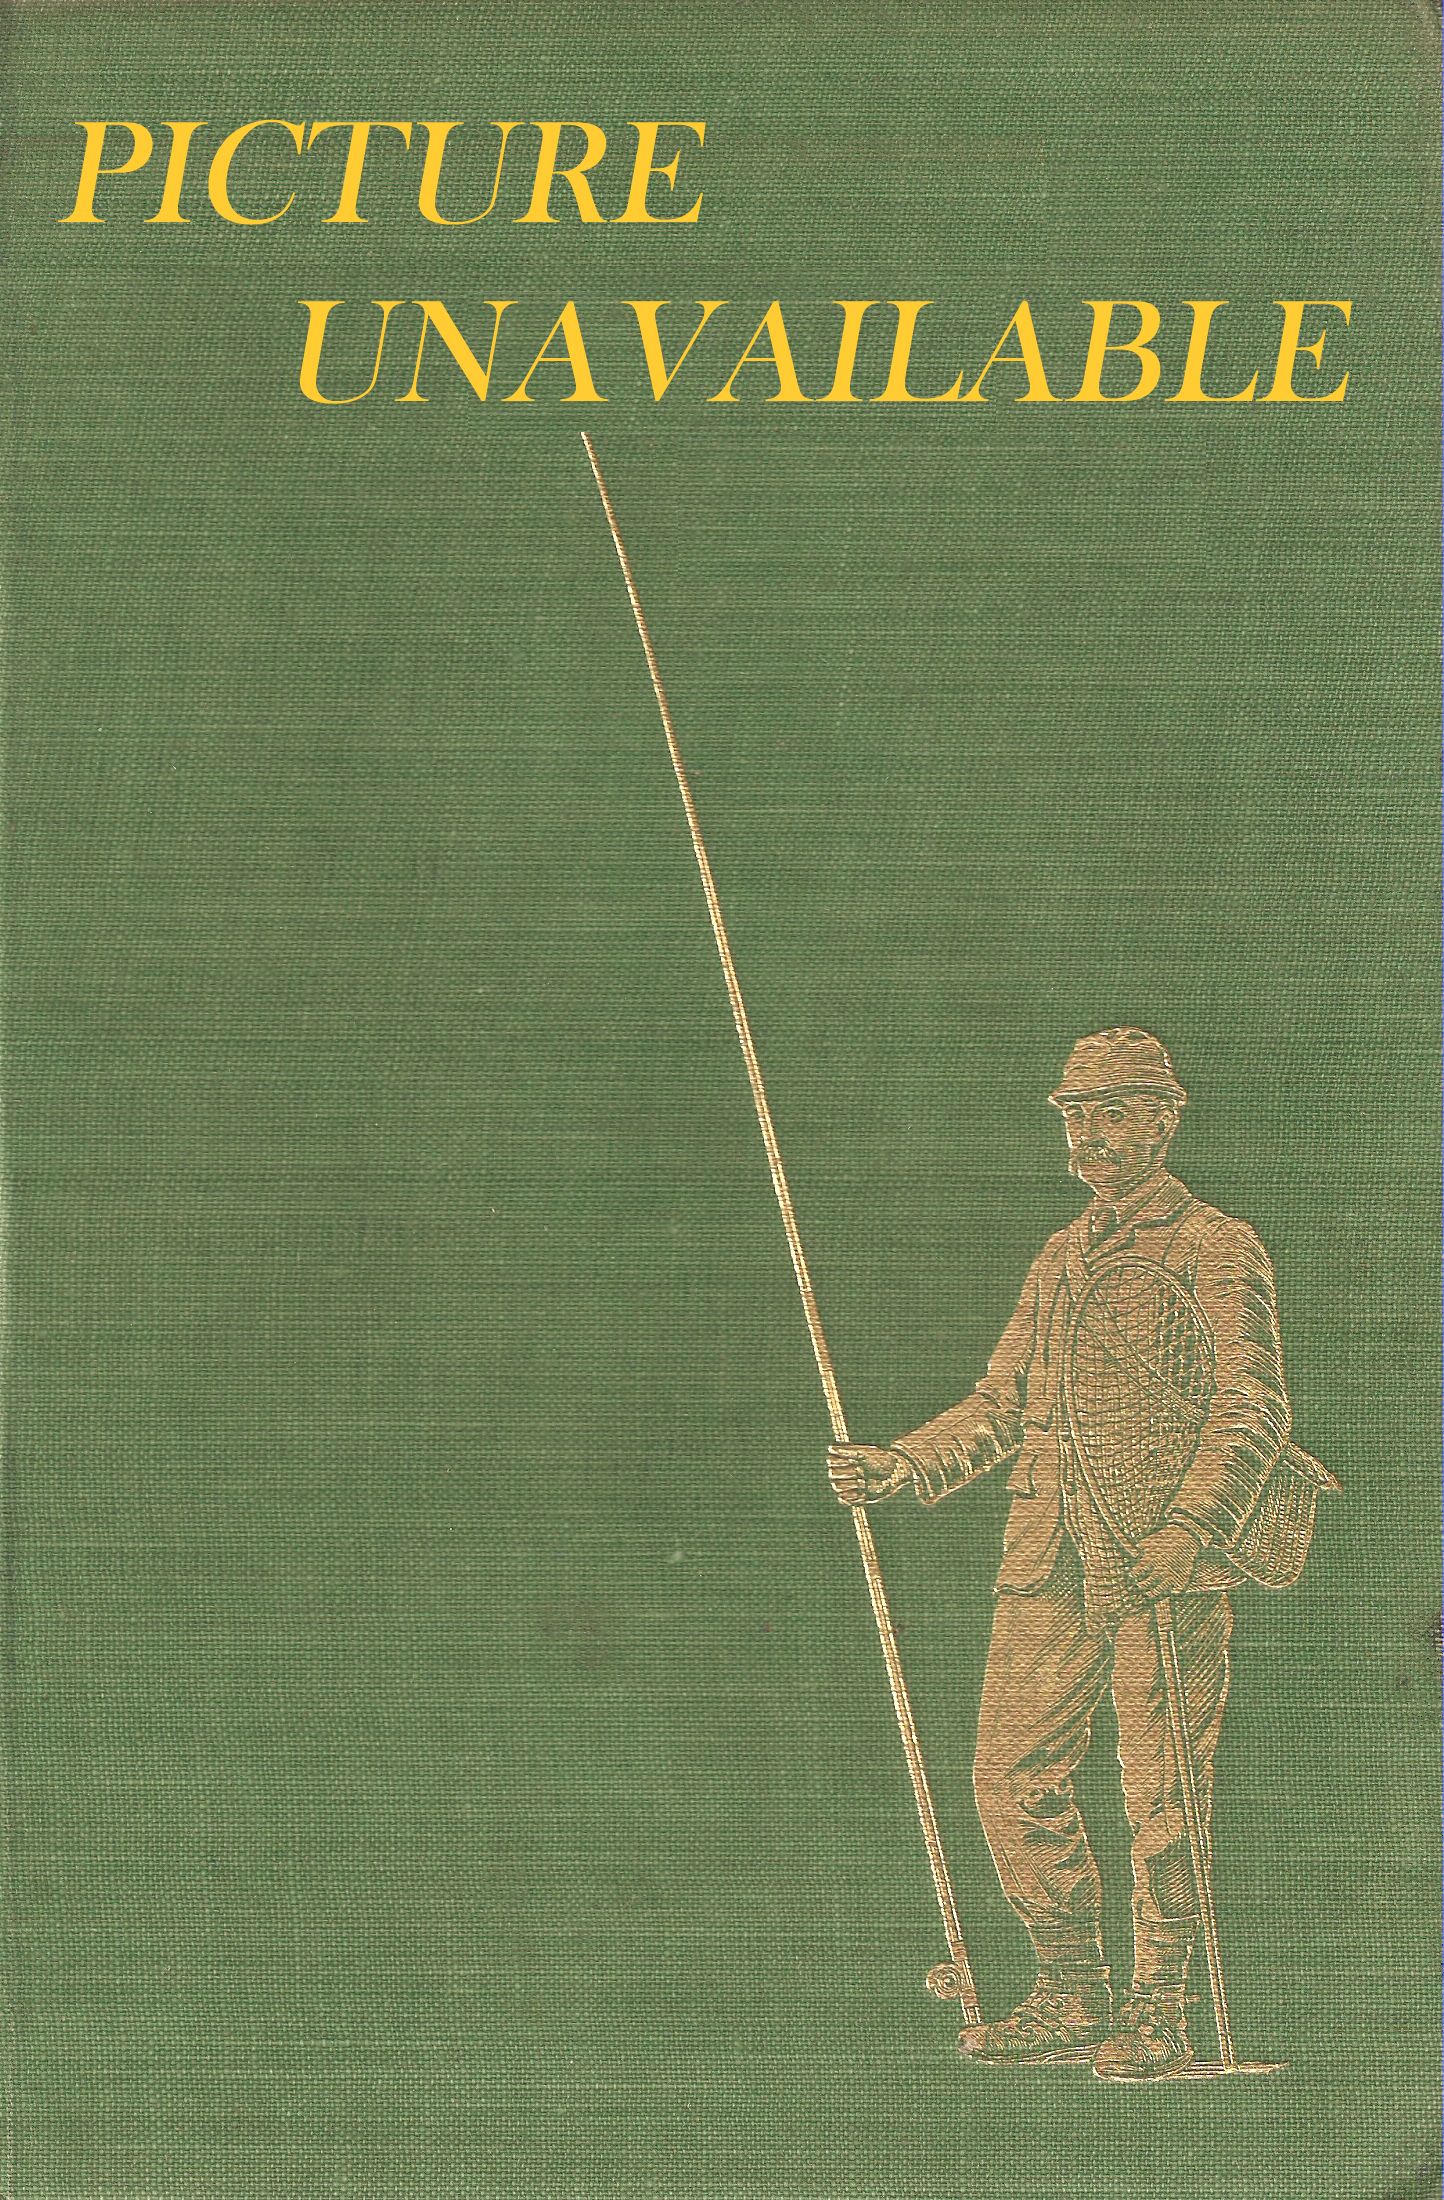 CREEL: A FISHING MAGAZINE. Volume 1, number 5. November 1963.